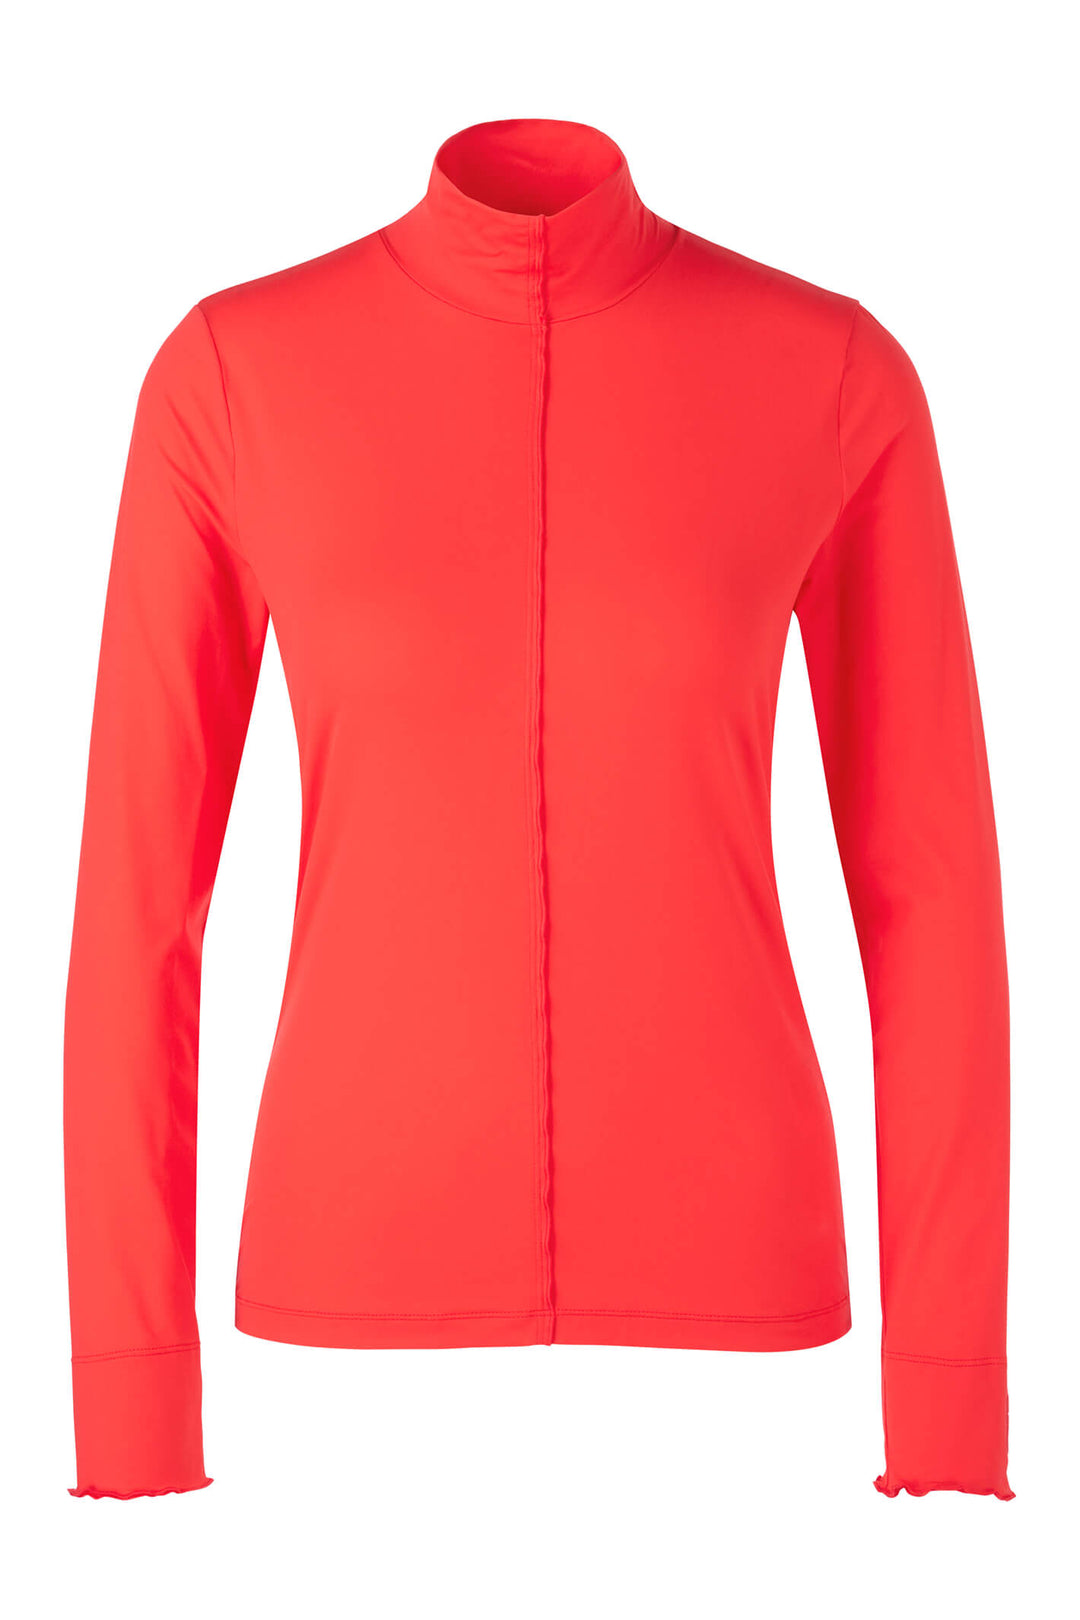 Marc Cain Sports VS 48.27 J18 278 Campari Orange Long Sleeve T-Shirt - Olivia Grace Fashion